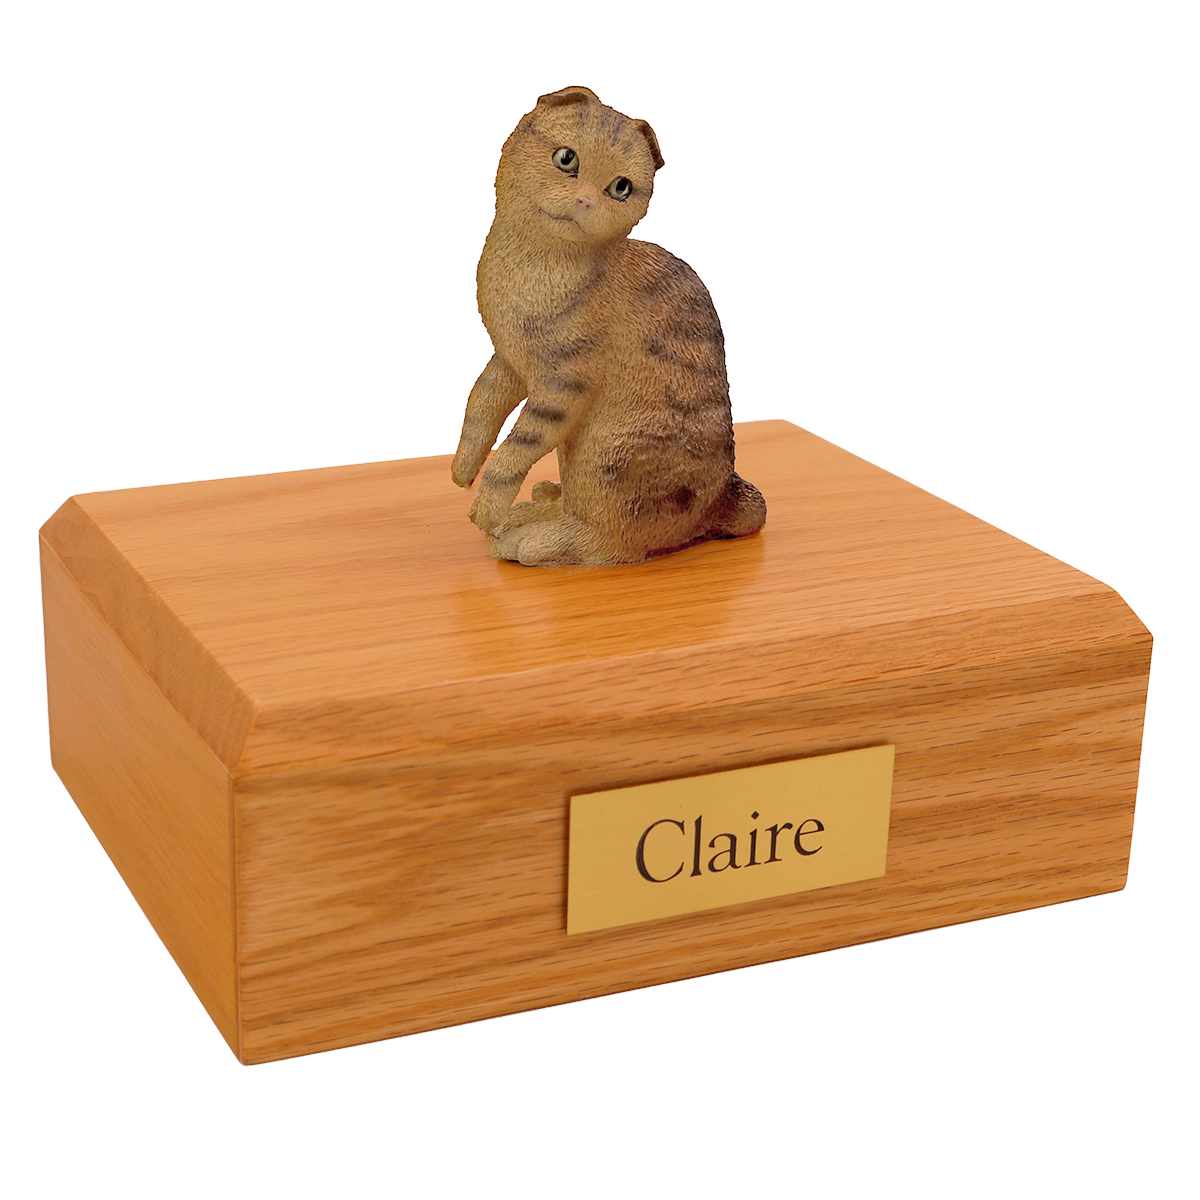 Cat, Scottish Fold, Brown Tabby - Figurine Urn